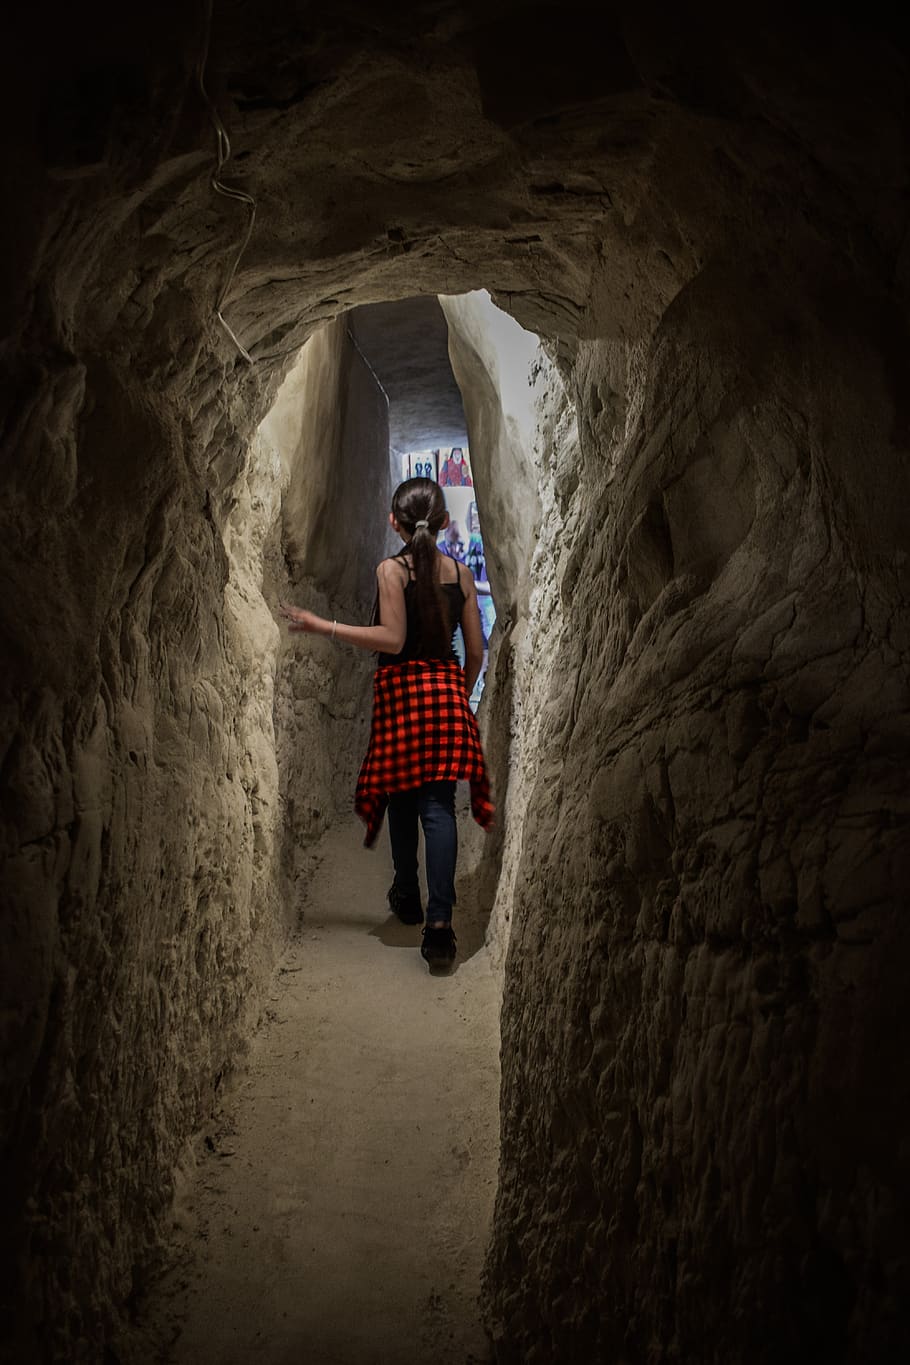 menina, criança, túnel, escuro, caverna, sombra, luz, sistema de metrô, igreja, subterrâneo